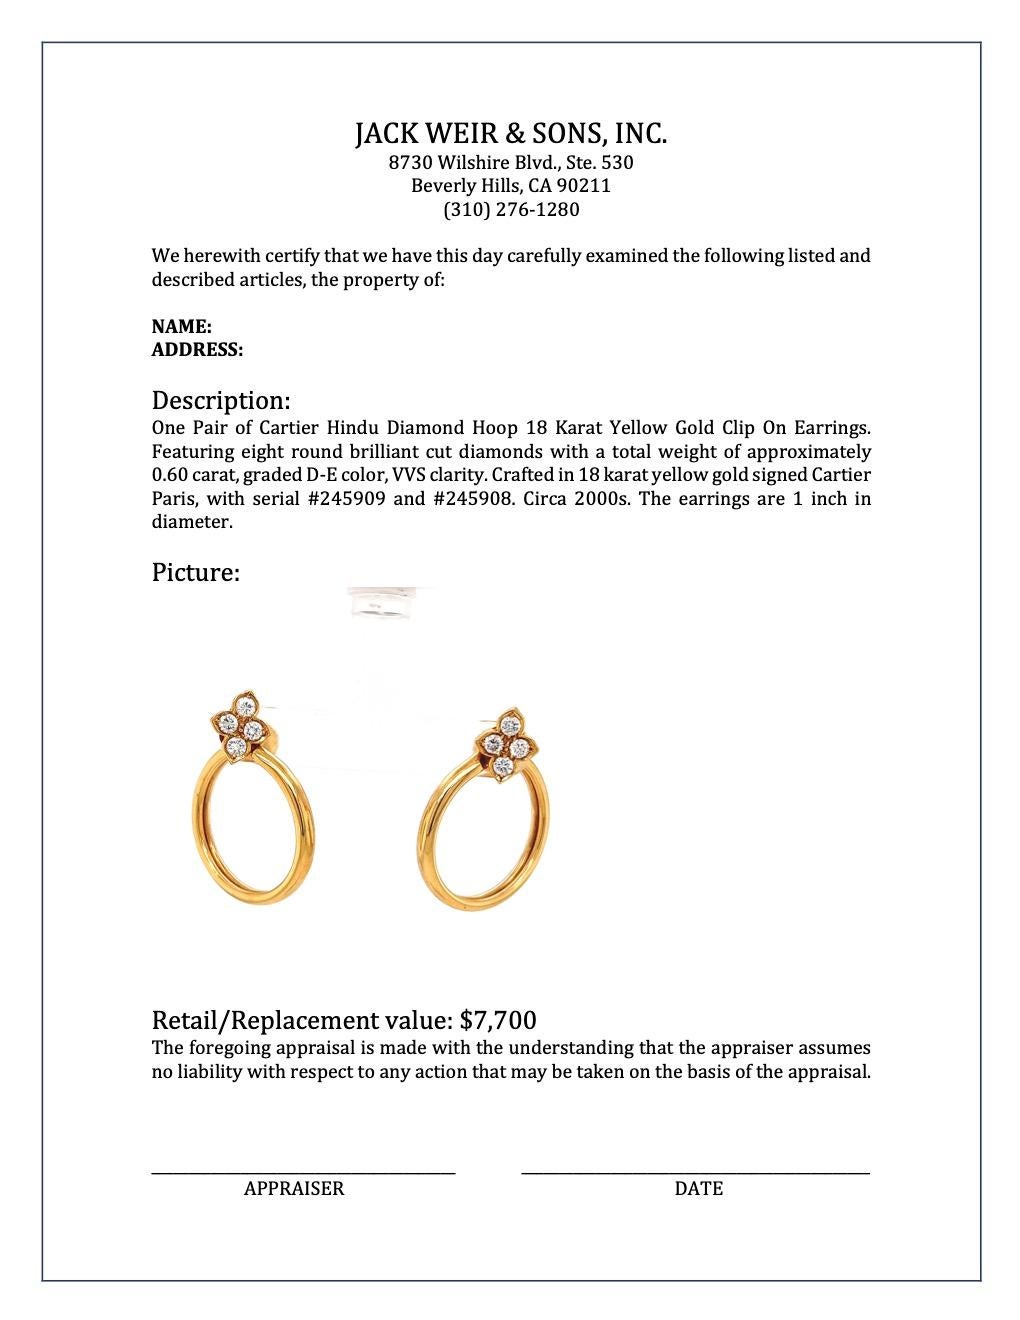 Women's or Men's Cartier Hindu Diamond Hoop 18 Karat Yellow Gold Clip on Earrings